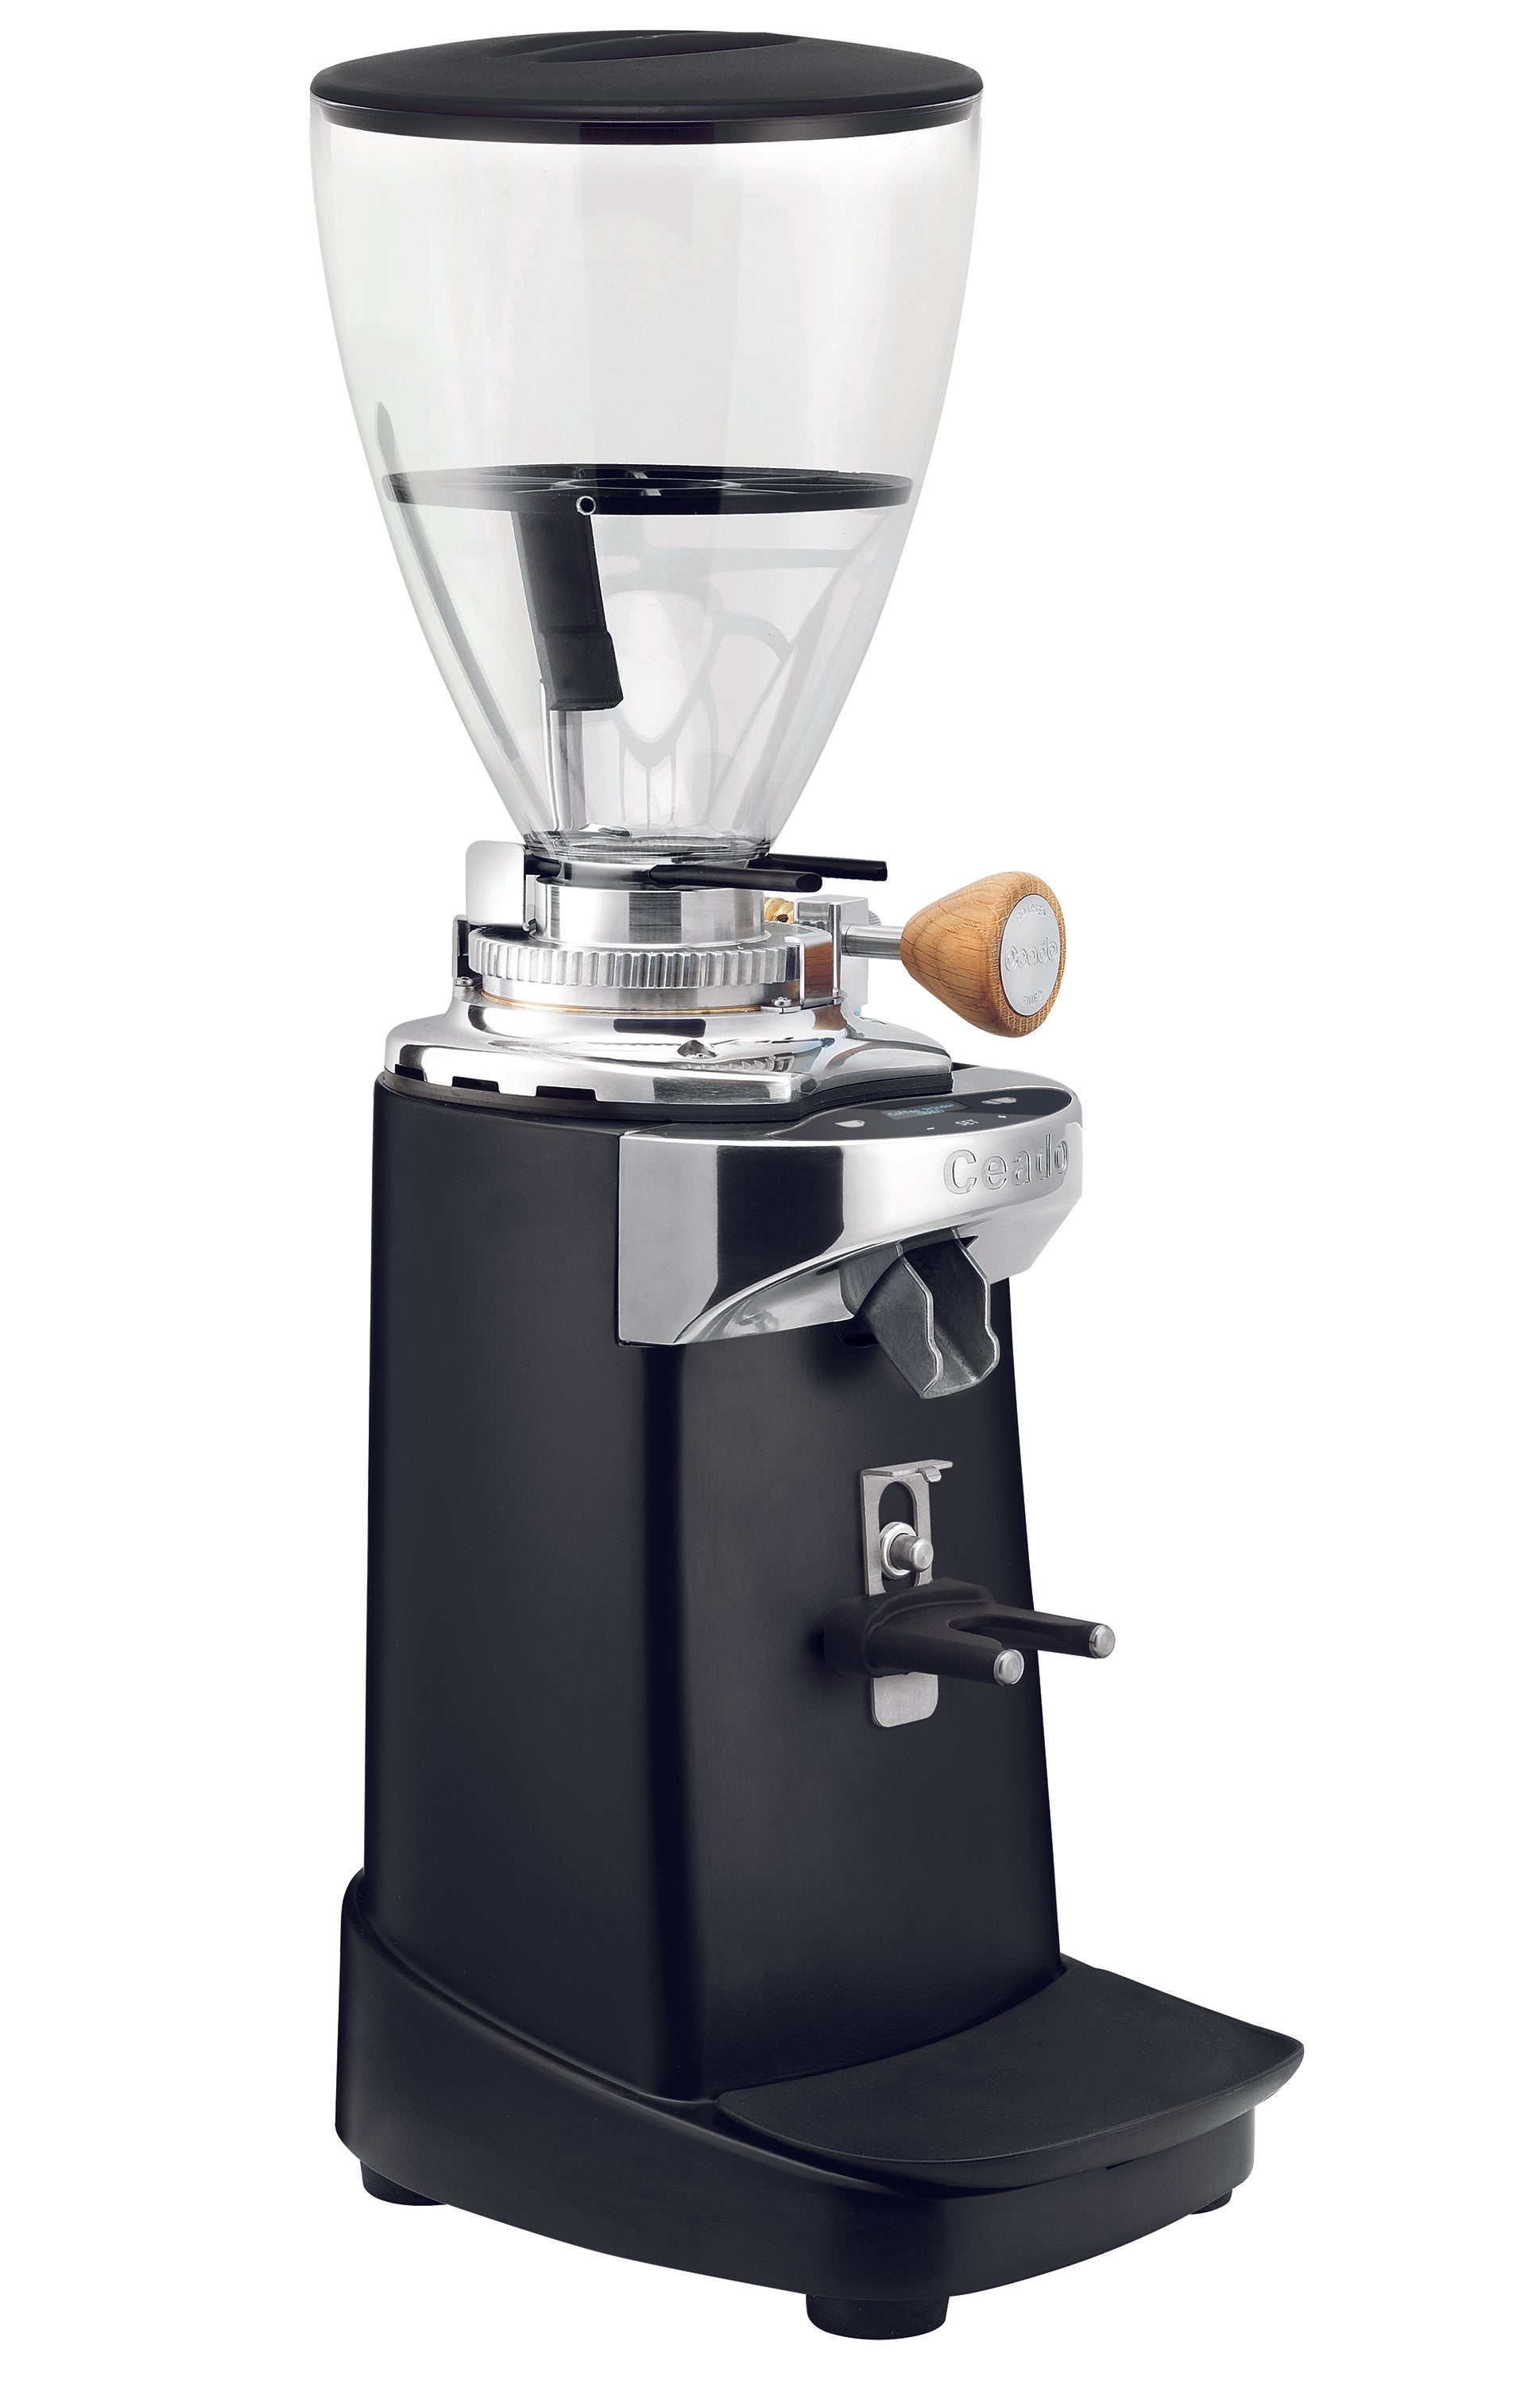 Compak R120 Retail/Industrial Grinder – Absolute Espresso Plus